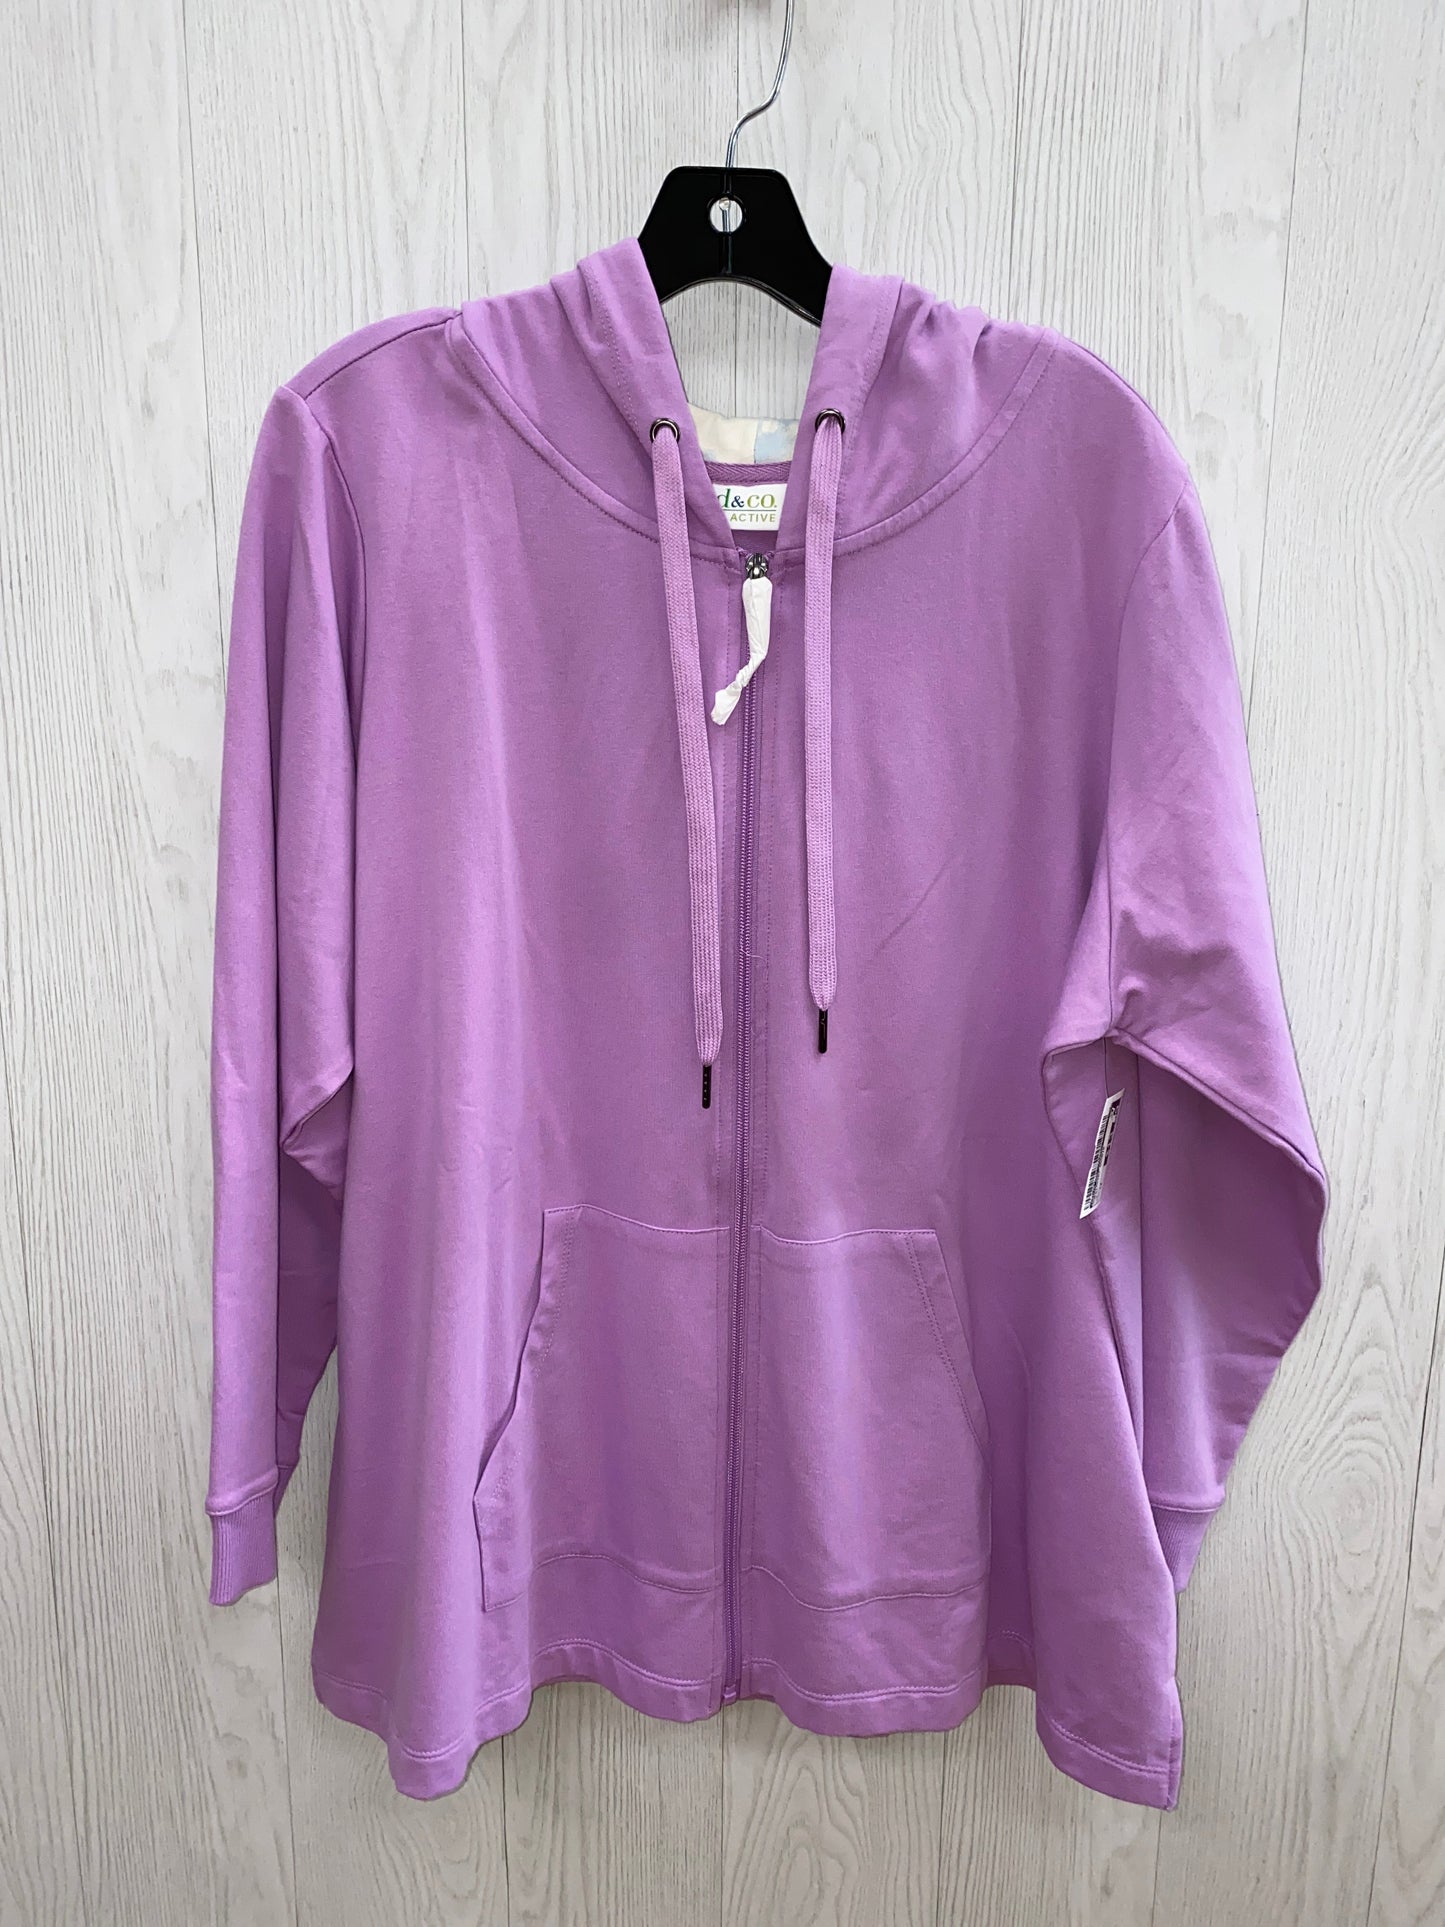 Sweatshirt Hoodie By Denim And Company  Size: 1x